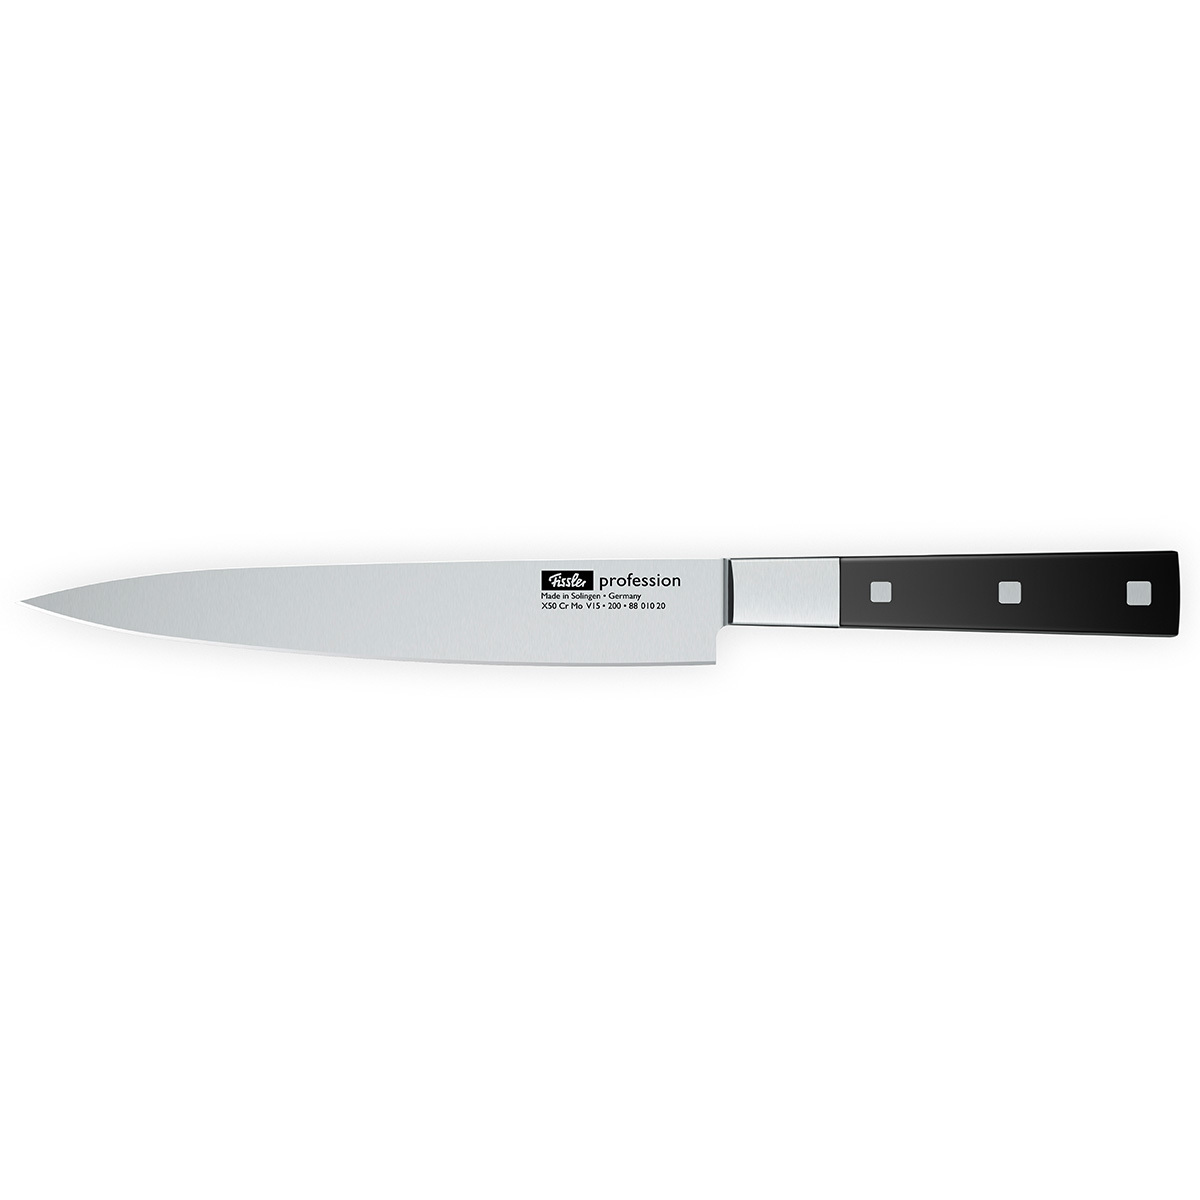 Нож для нарезки Fissler Profession 200 мм 8801020 - 1